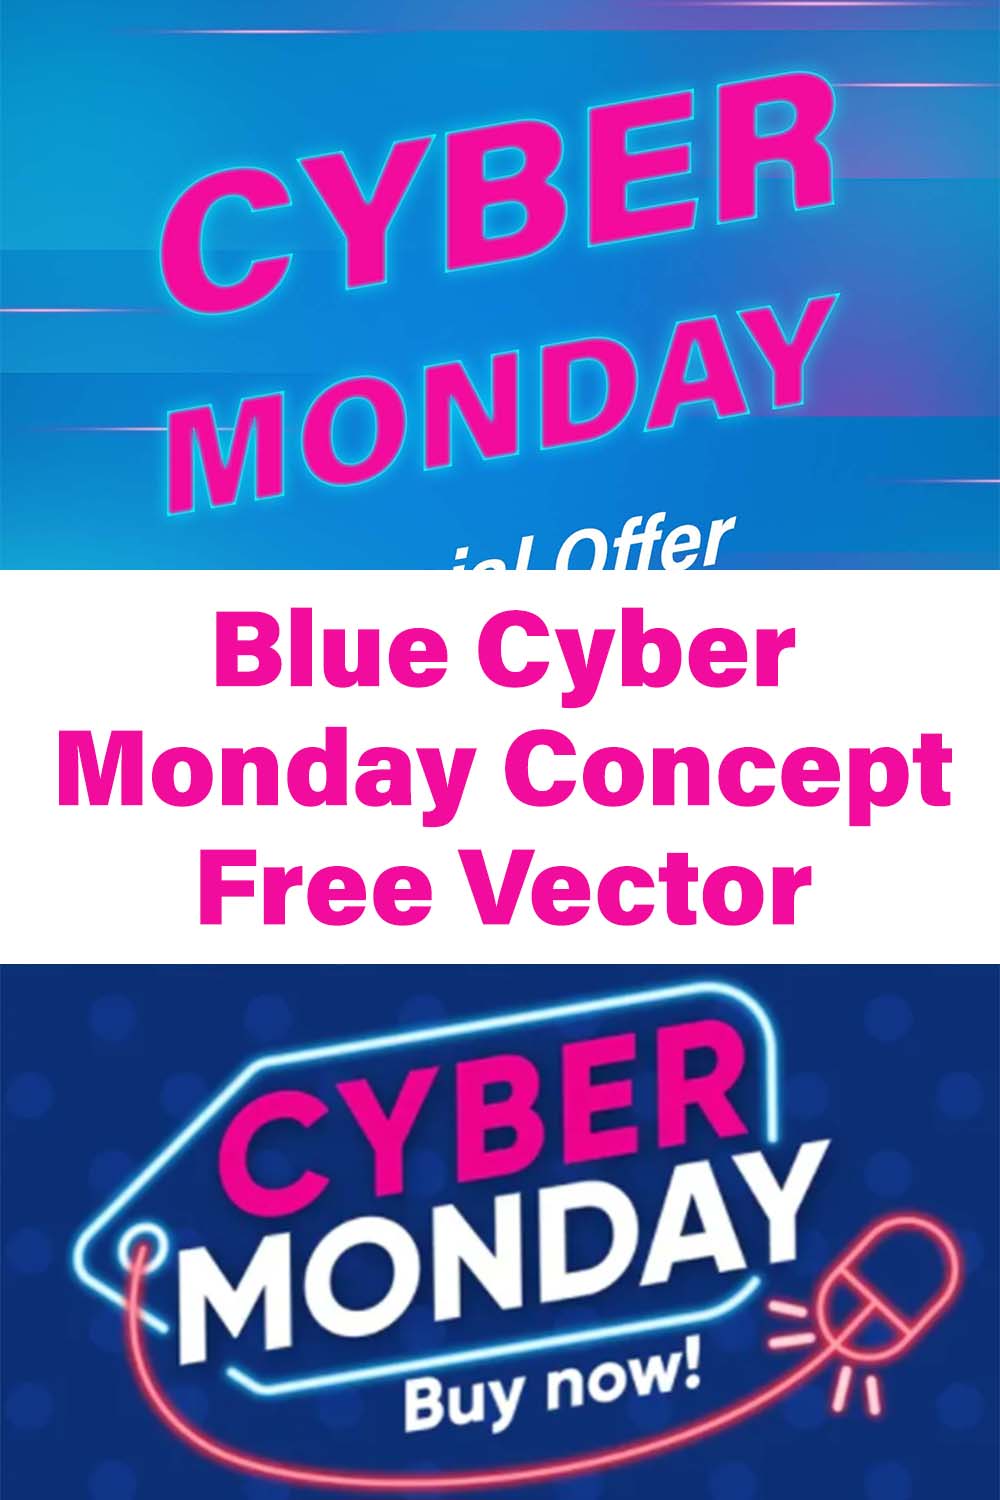 Blue Cyber Monday Concept Free Vector pinterest.